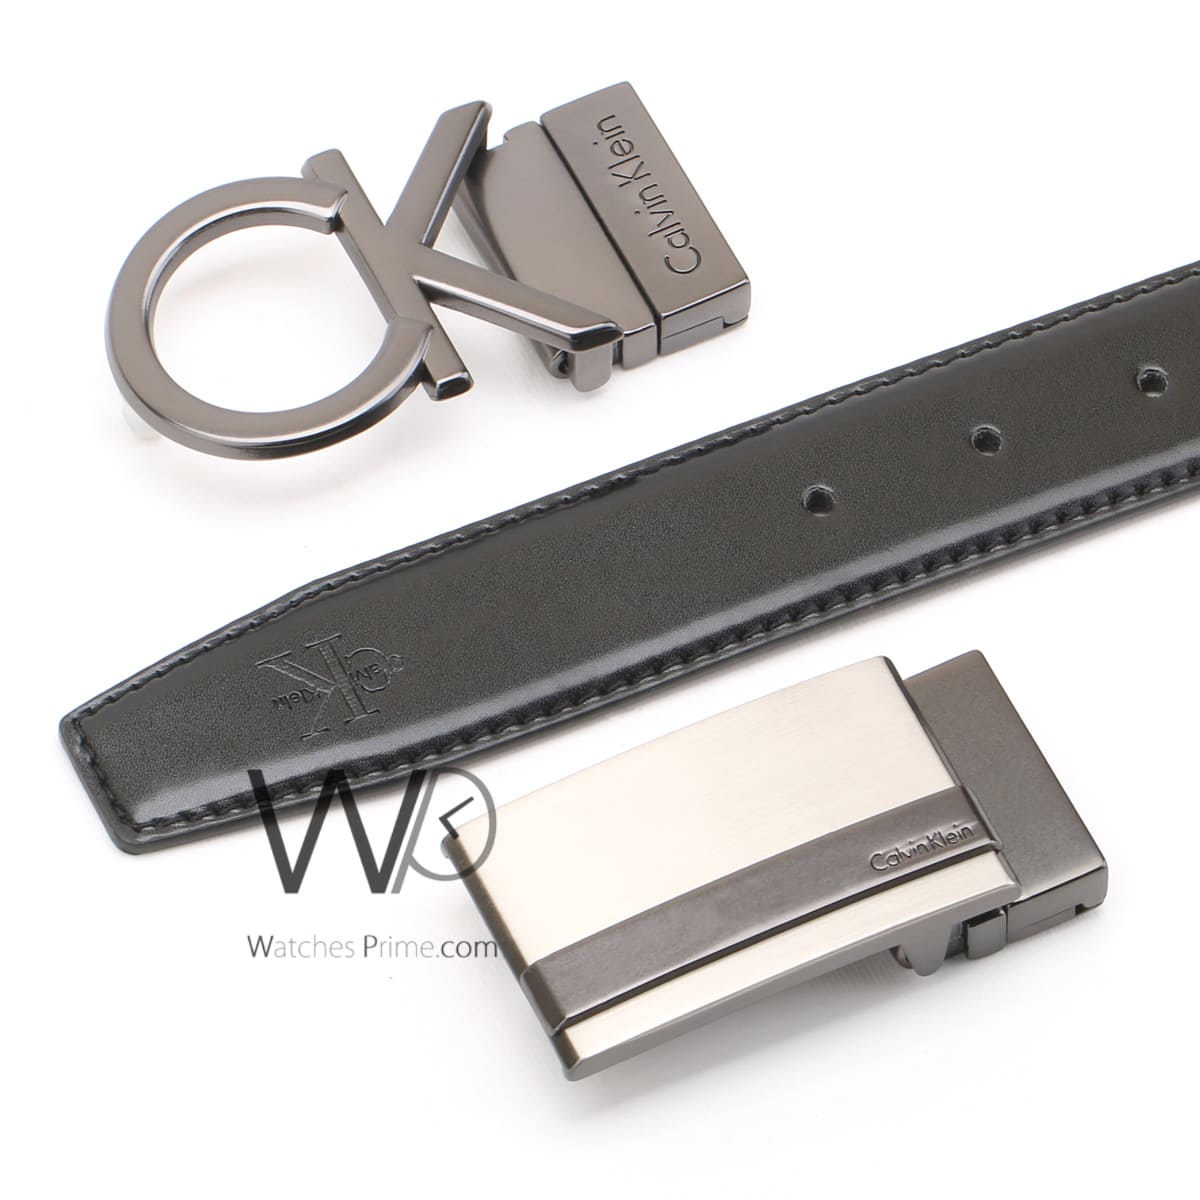 Calvin Klein CK belt for Watches 2 buckle | Prime men